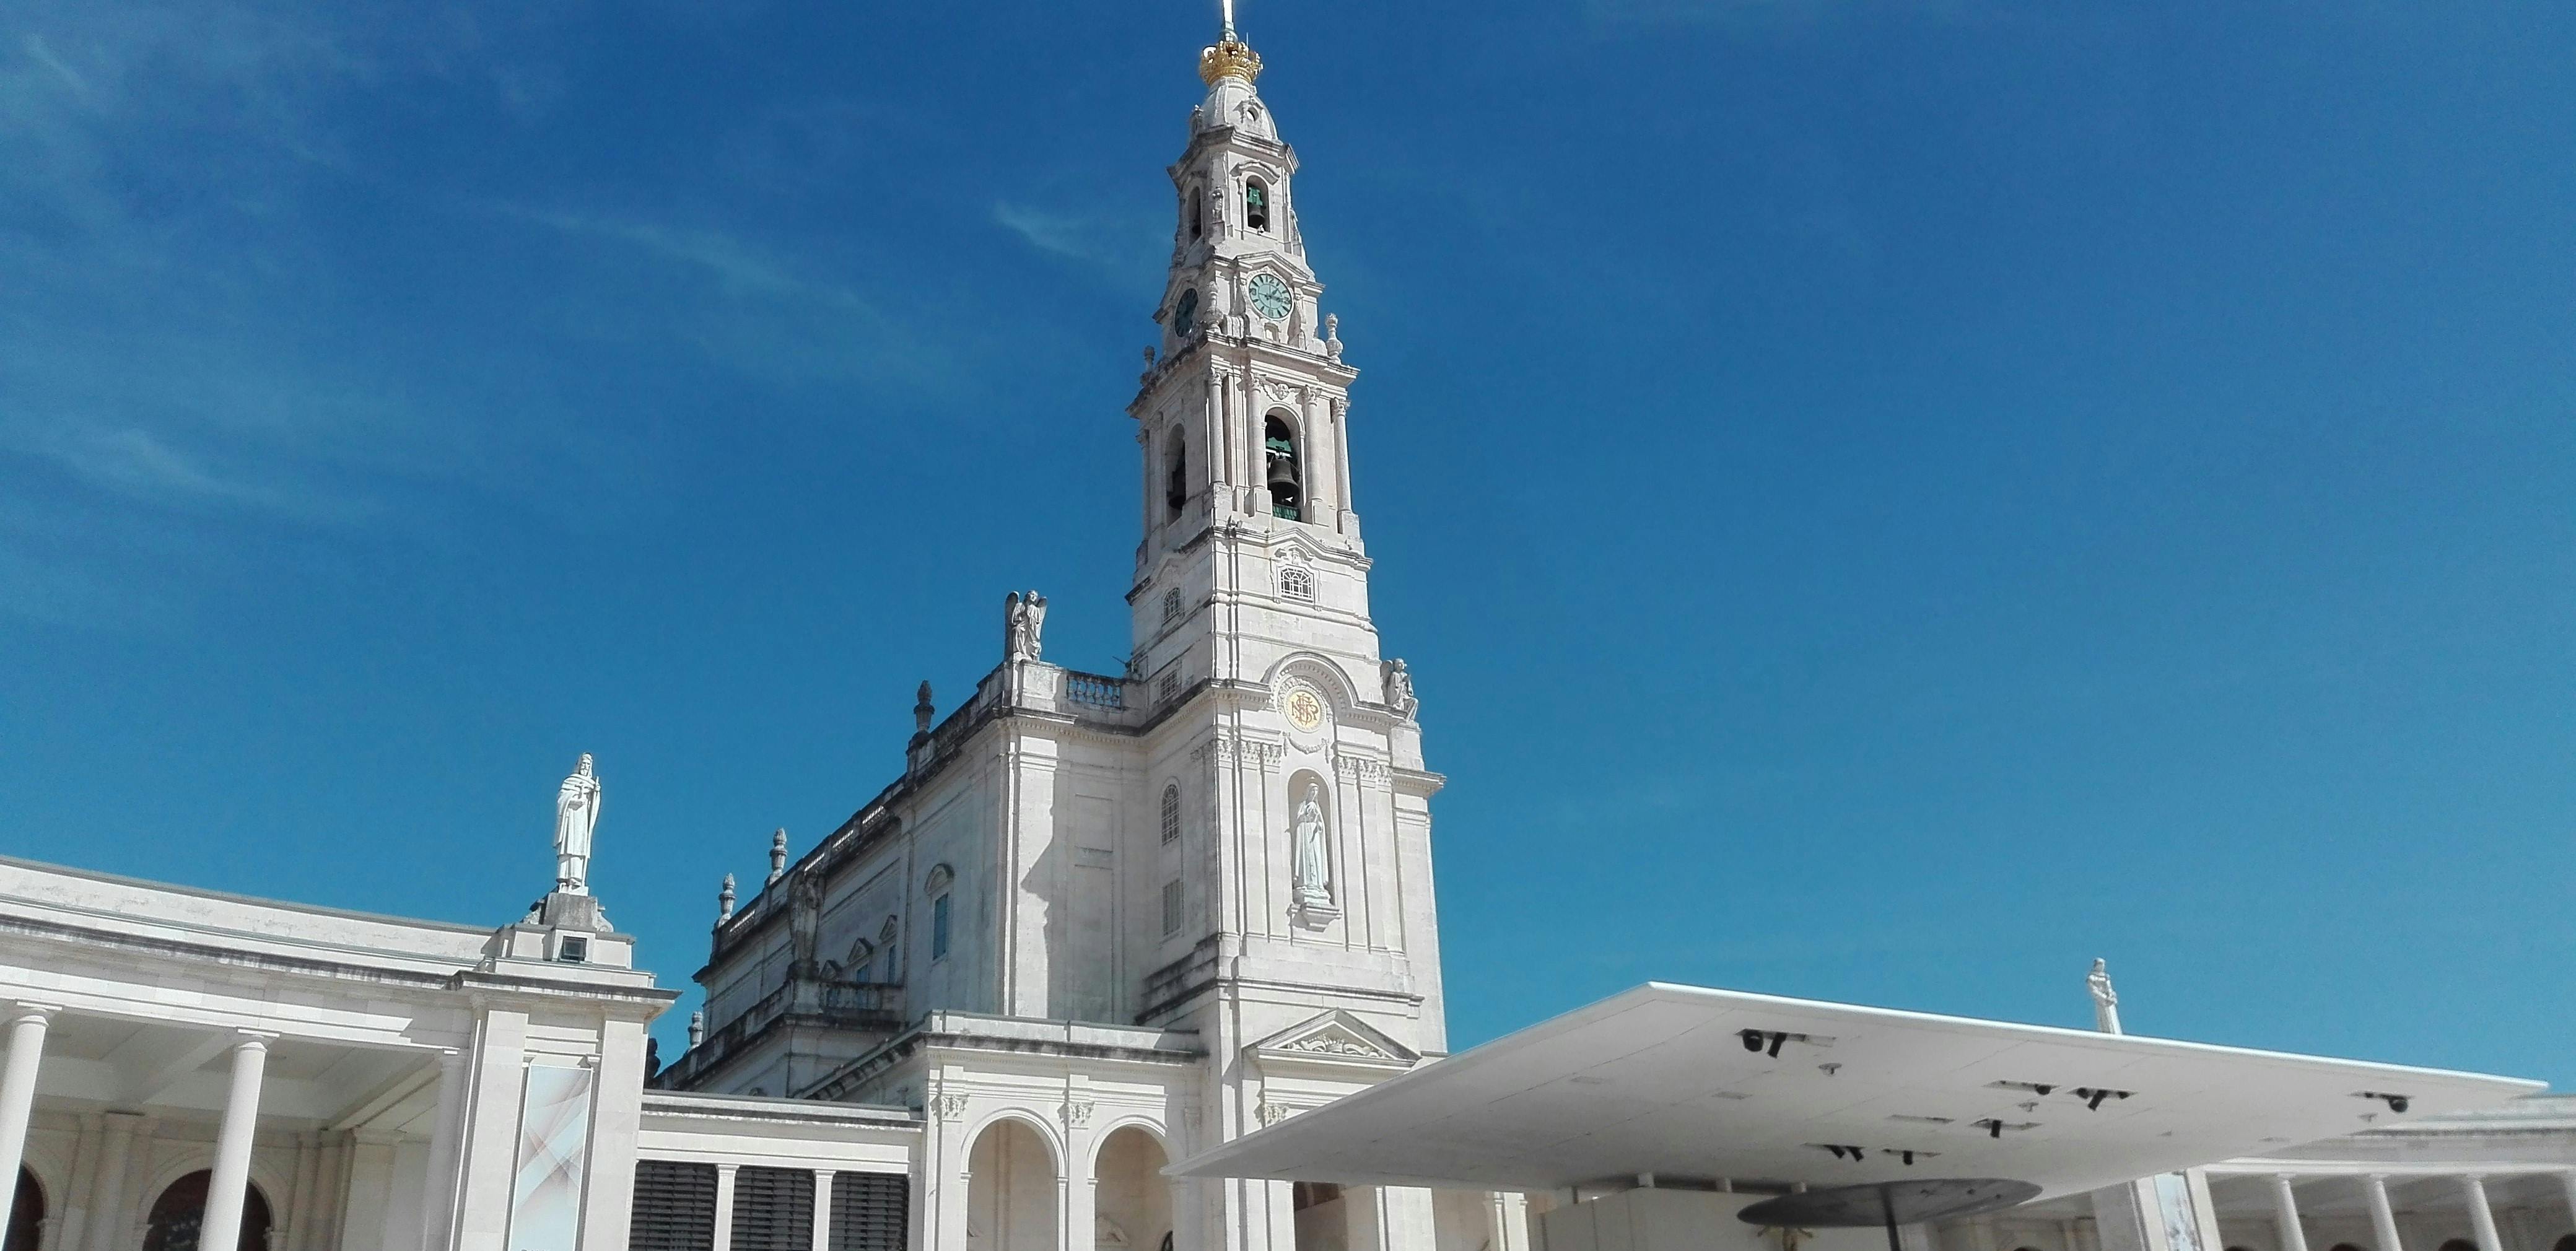 Fatima Sanctuary and Pastorinhos tour from Coimbra Musement